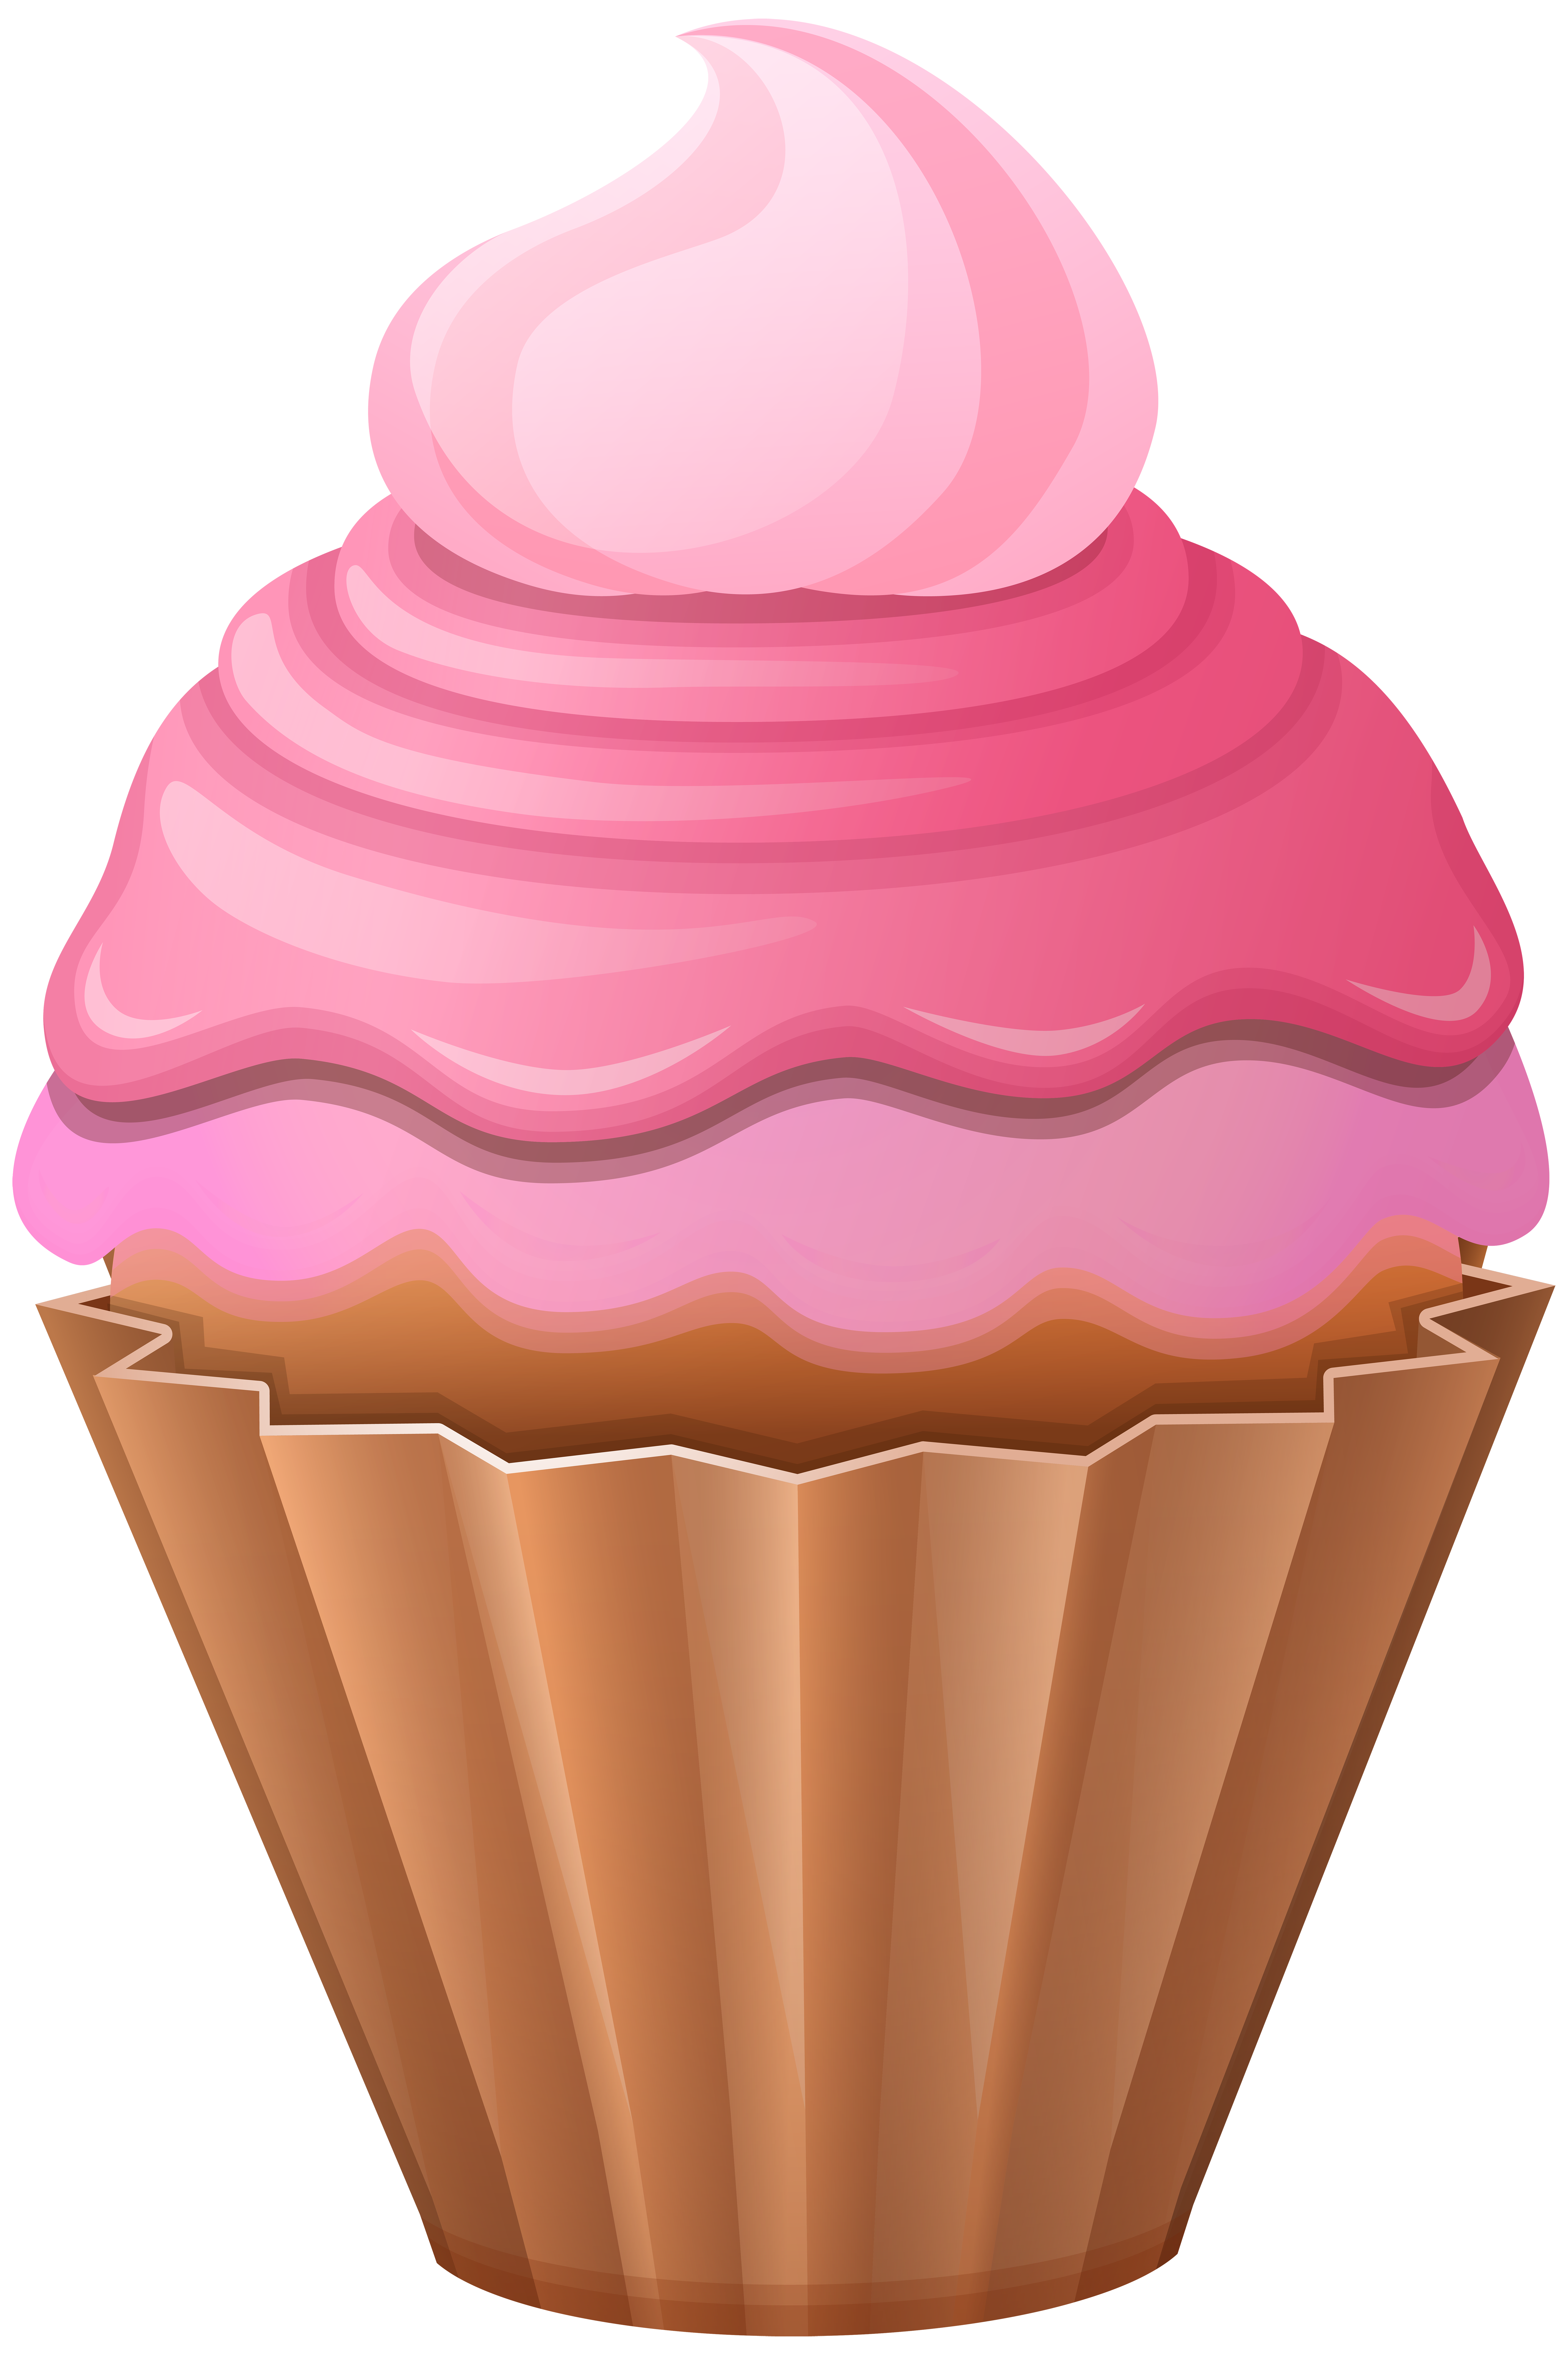 Cupcakes clipart buttercream. Cupcake png clip art